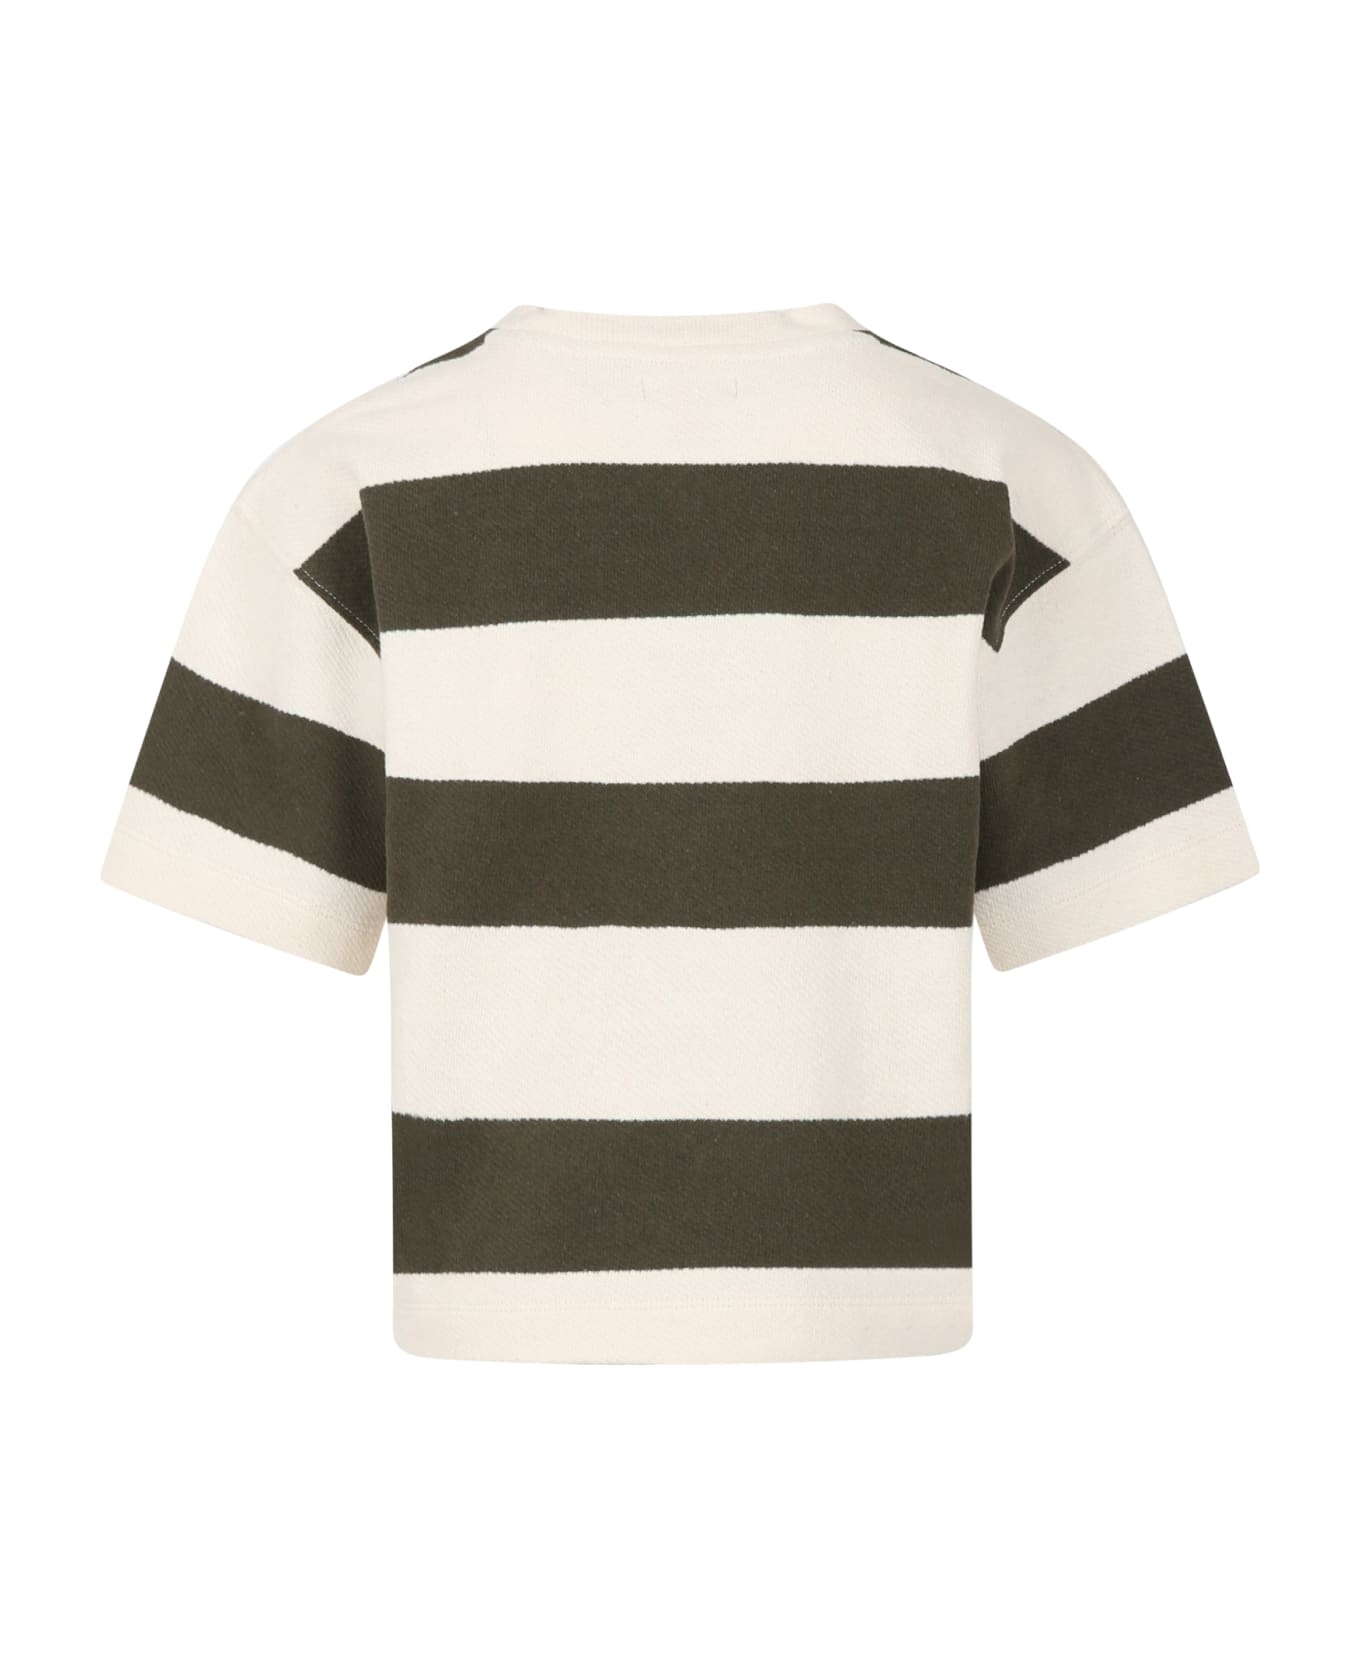 Bellerose Multicolor Striped T-shirt For Boy - Multicolor